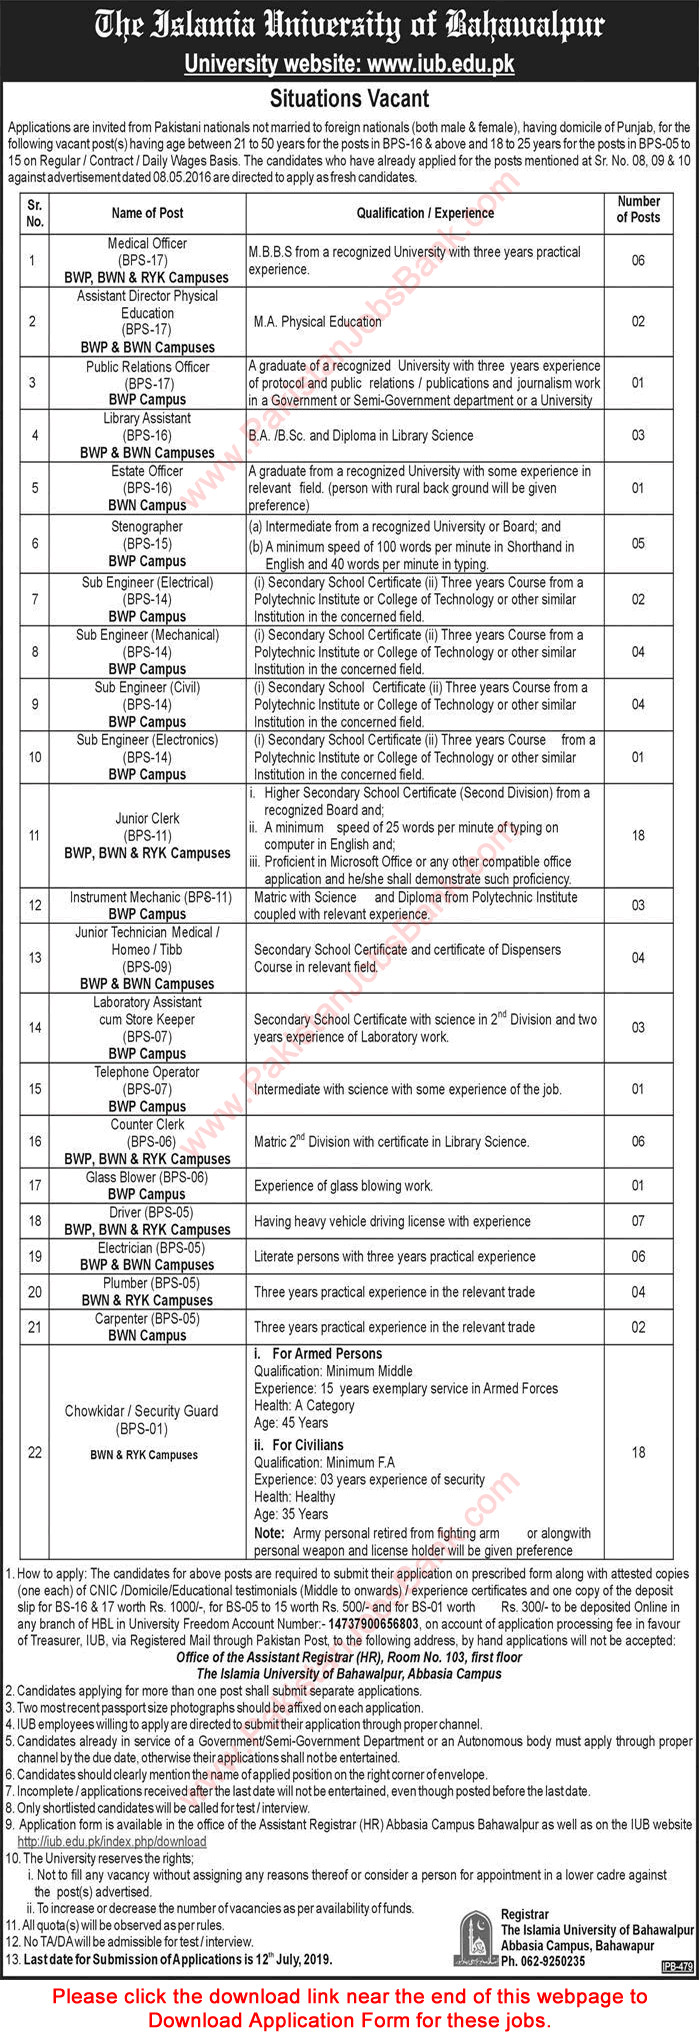 Islamia University Bahawalpur Jobs June 2019 Application Form Clerks, Sub Engineers & Others Latest